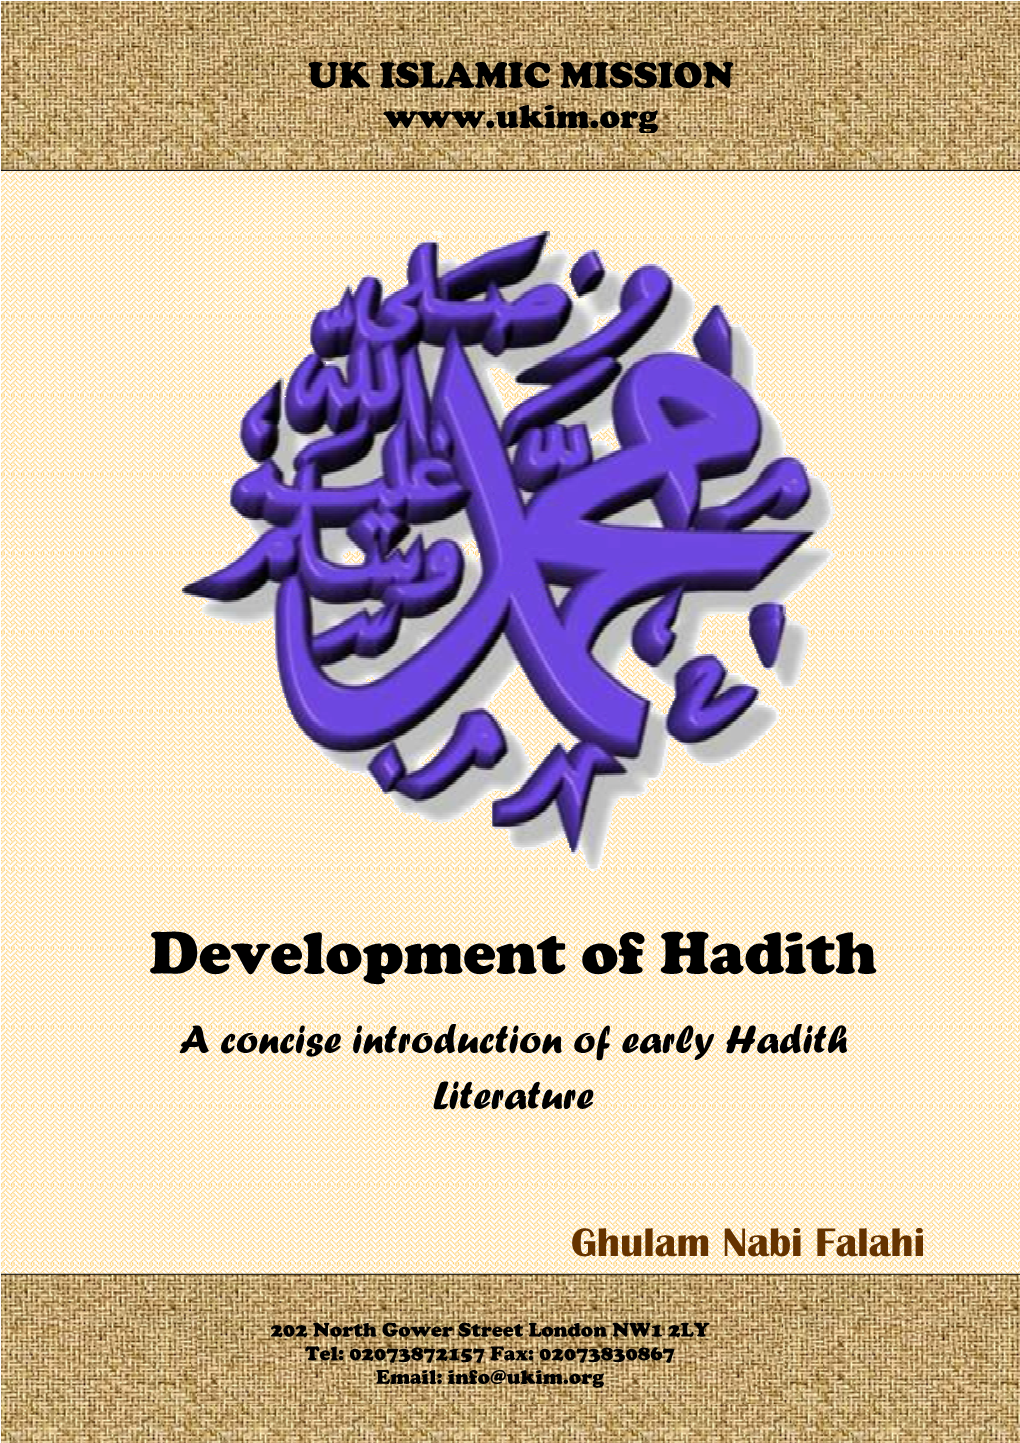 Development of Hadith Literature